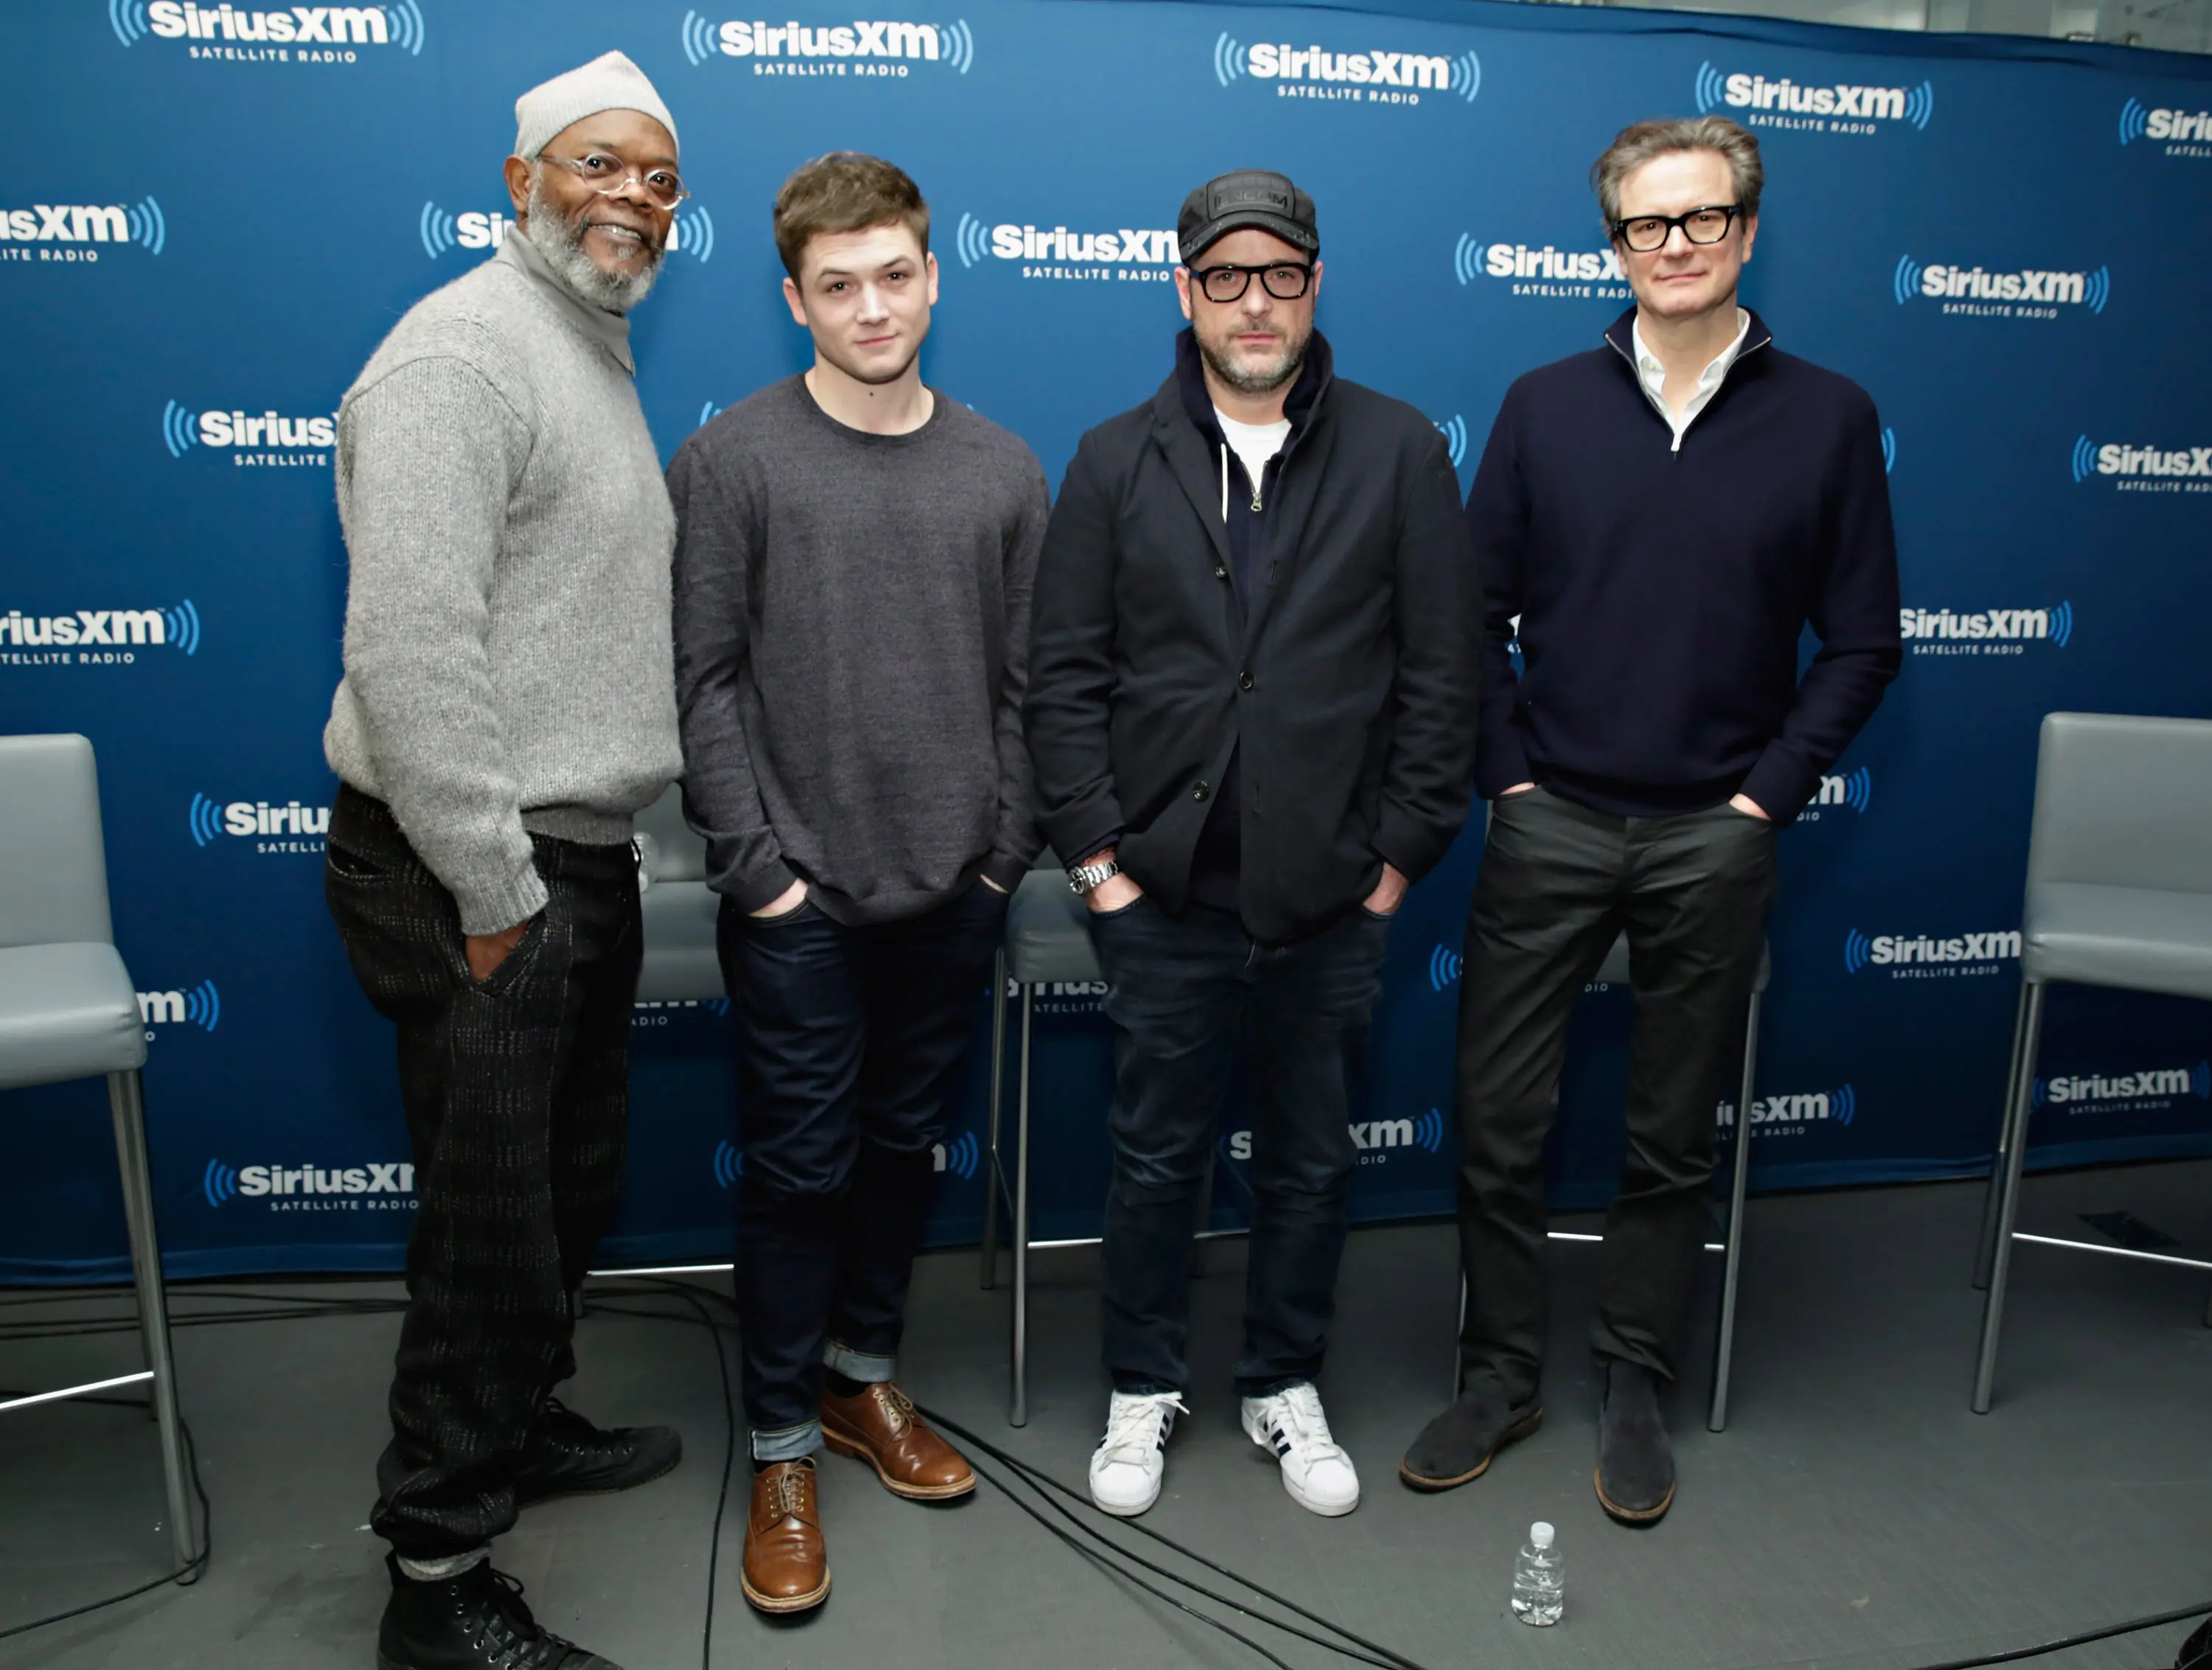 Setelah pembukaan di awal tahun 2015, Kingsman meraup lebih dari $400,000,000 di global box office, menjadi kejutan besar untuk 20th Century Fox. ‘Kingsman 2’ yang judul resminya belum diumumkan, dijadwalkan rilis pada 16 Juni 2017. (AFP/Bintang.com)